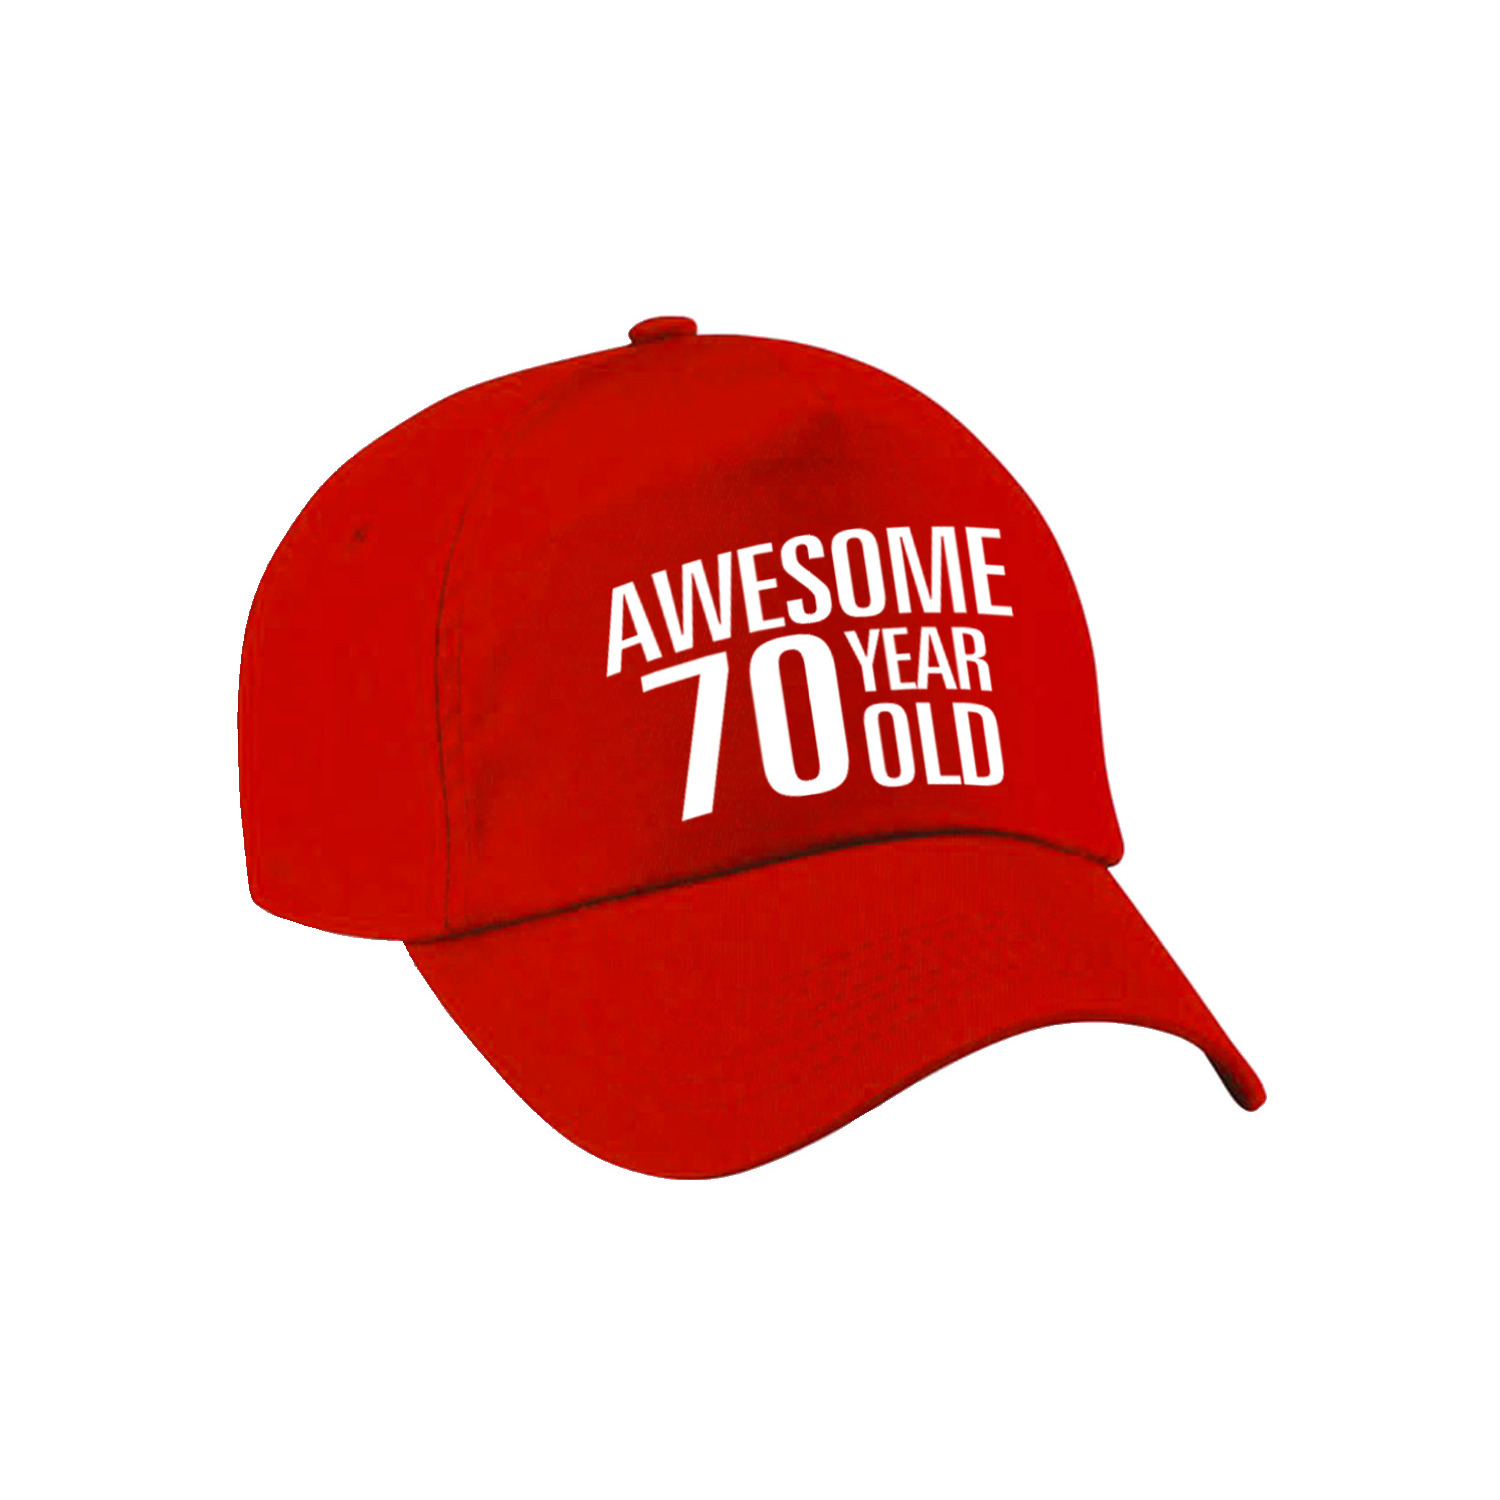 Awesome 70 year old verjaardag pet / cap rood voor dames en heren